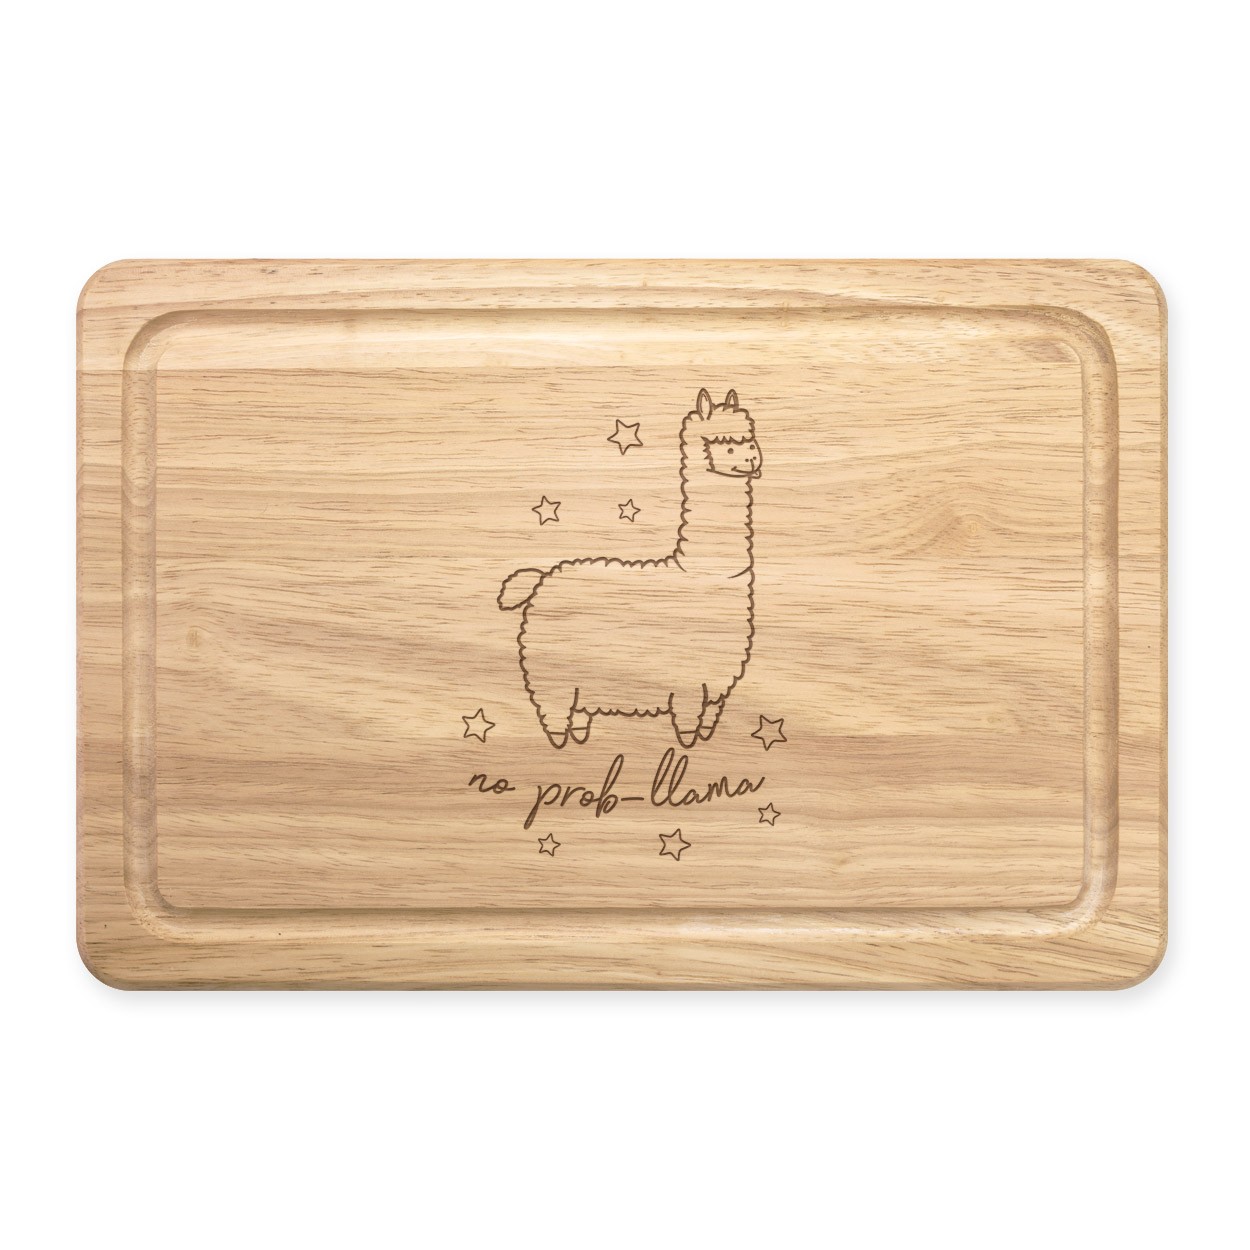 No Prob-Llama Rectangular Wooden Chopping Board